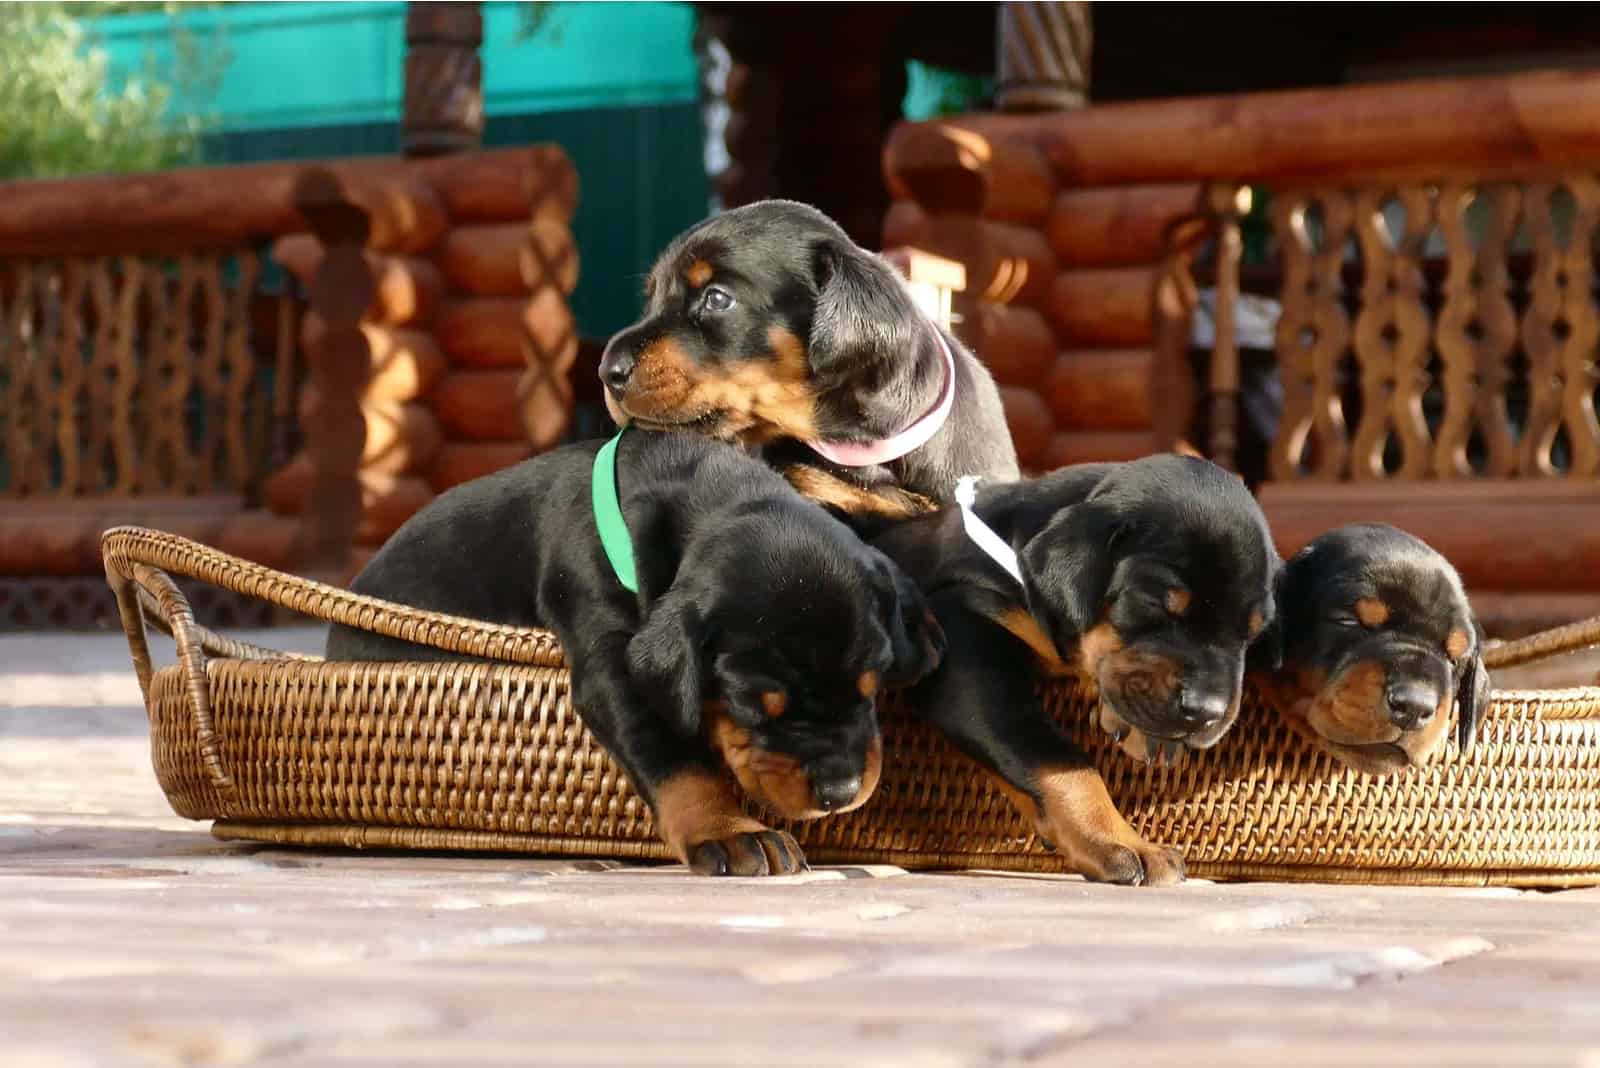 Group of doberman puppies in basket